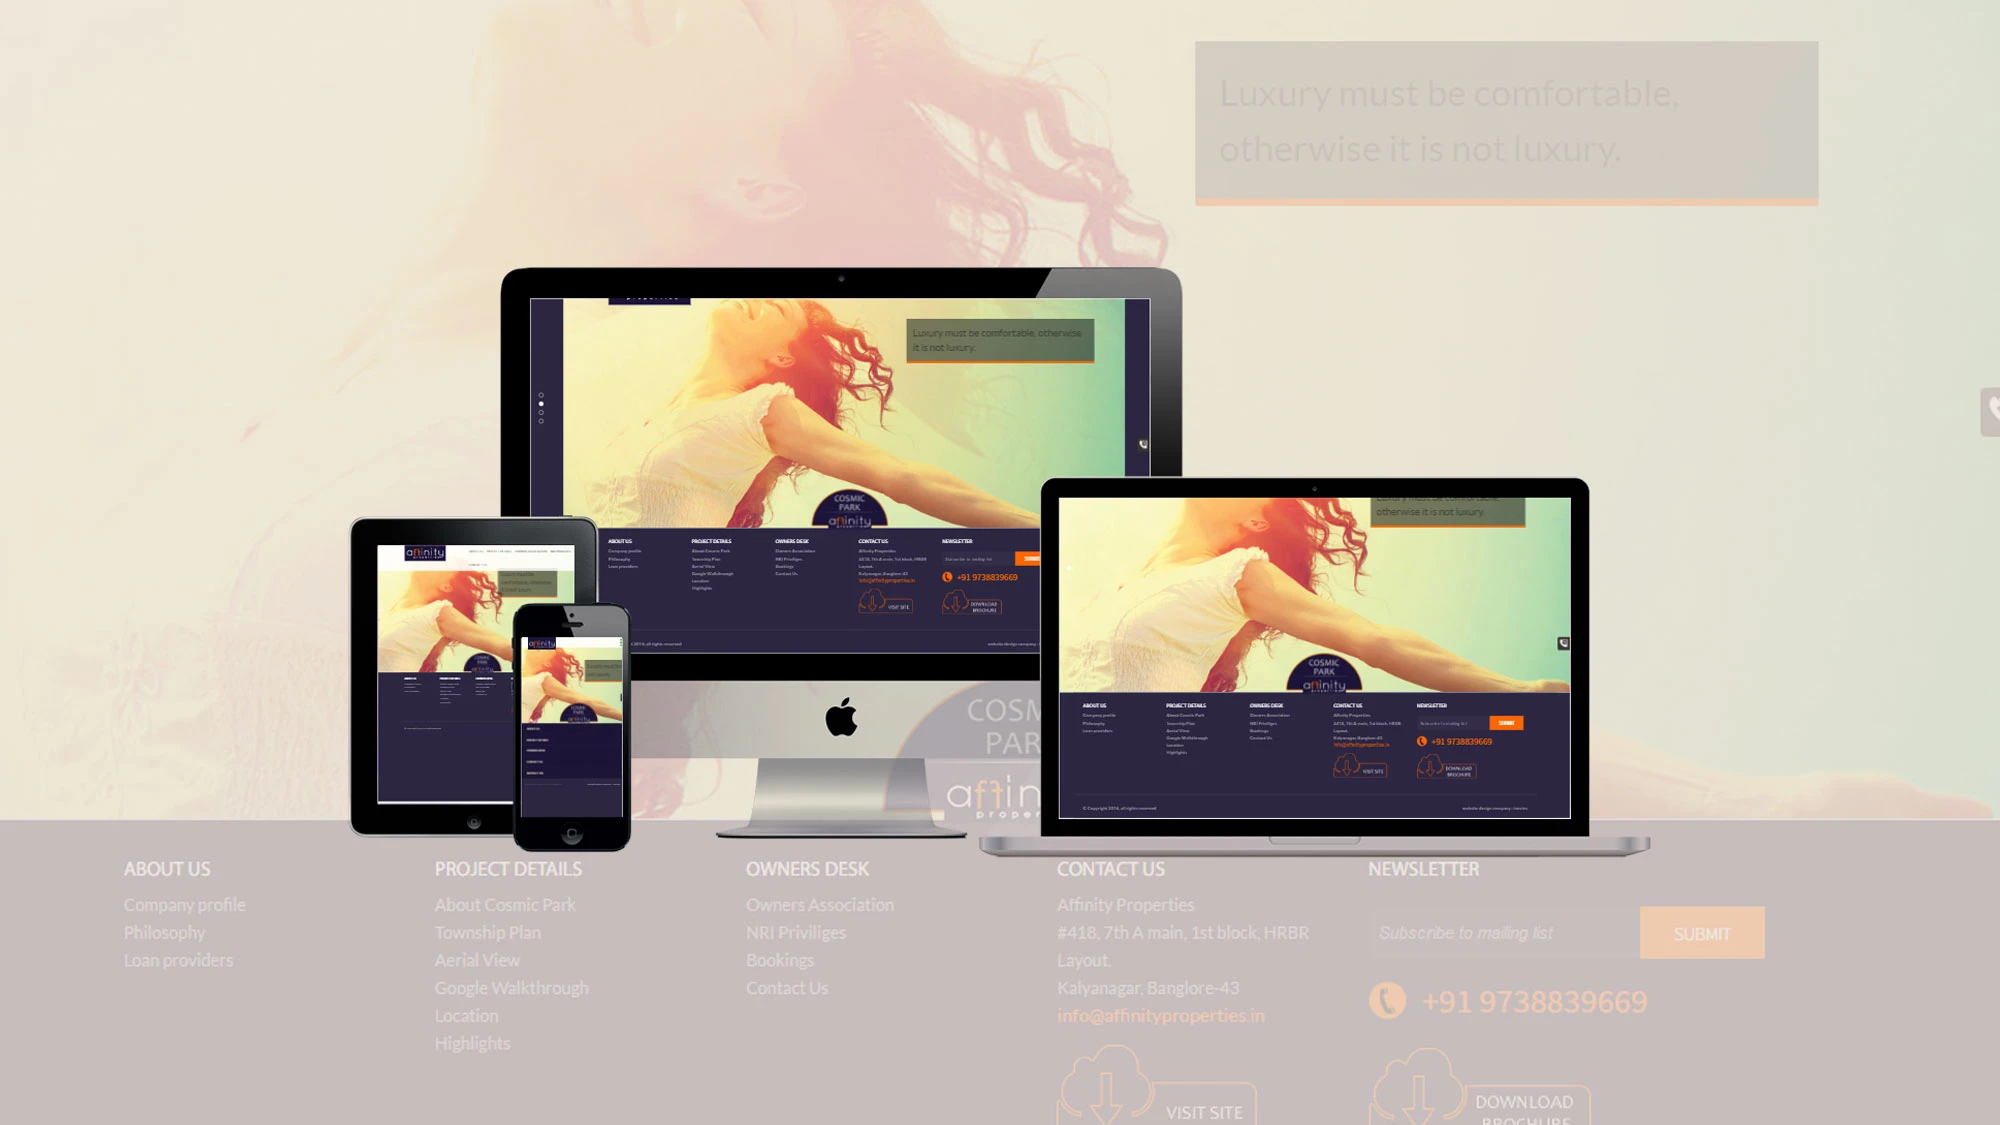 slide1 - inovies web design and development company portfolio